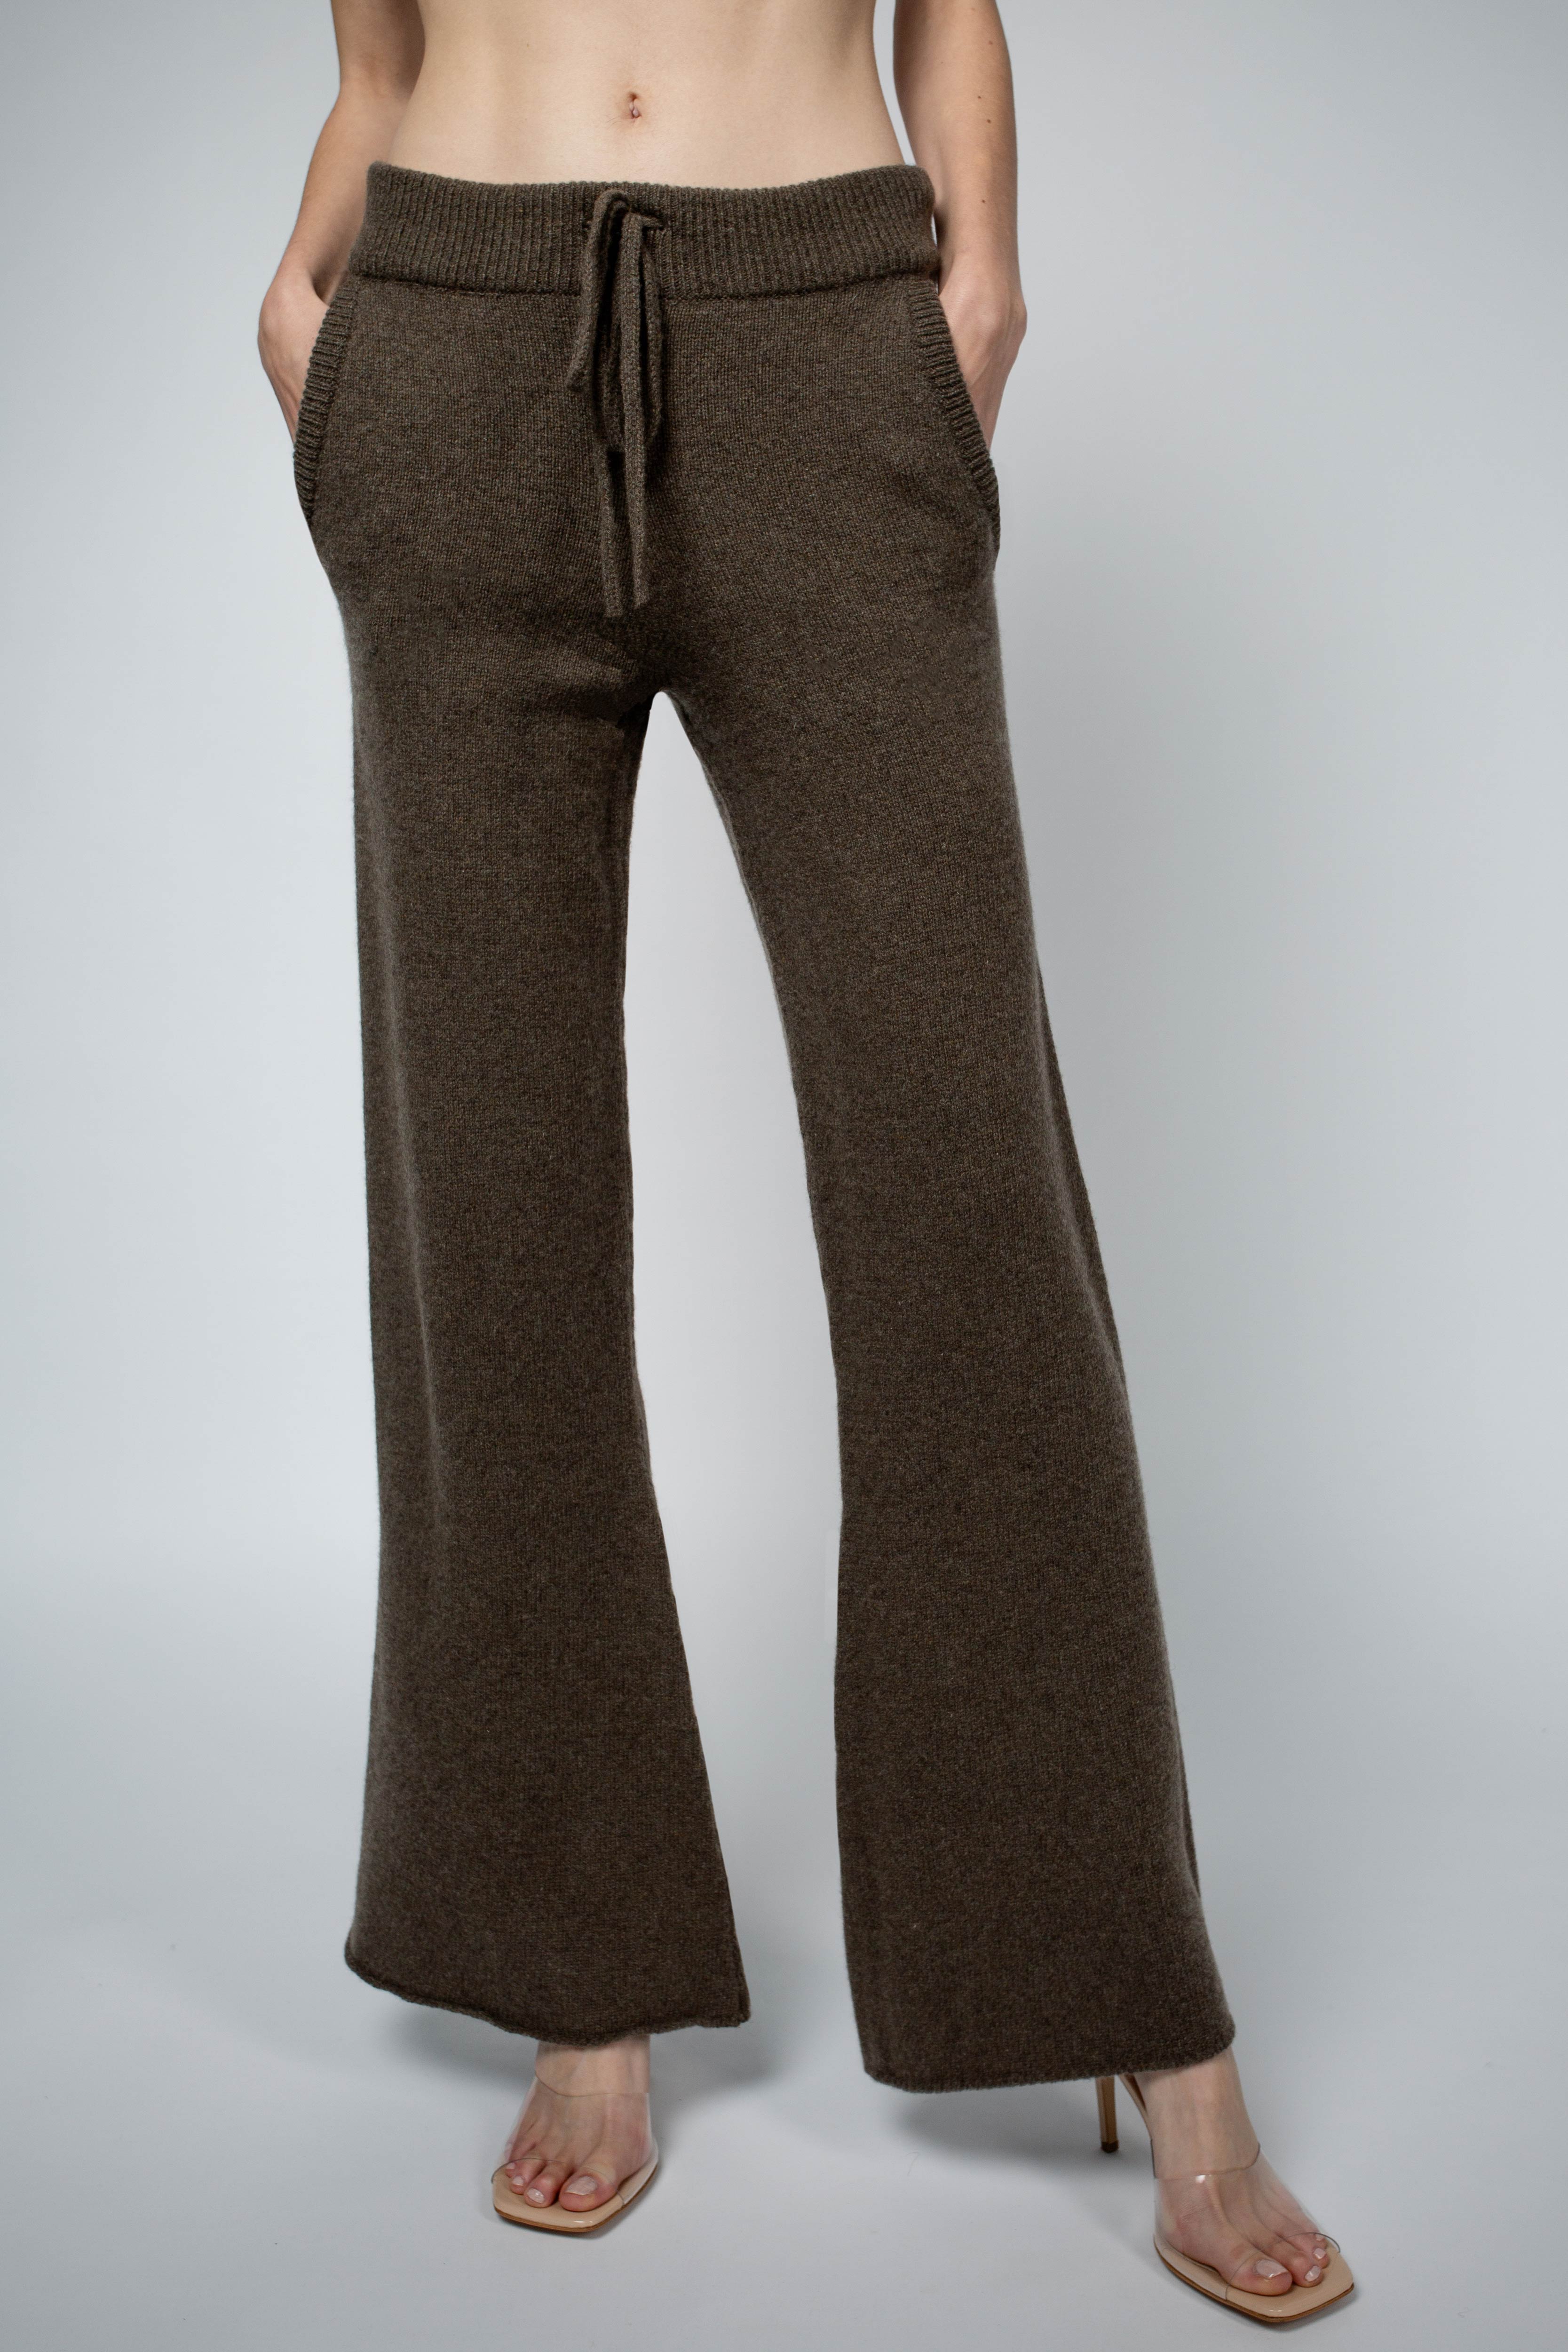 SANTICLER Flare Leg Cashmere Lounge Pant in Chestnut – Santicler